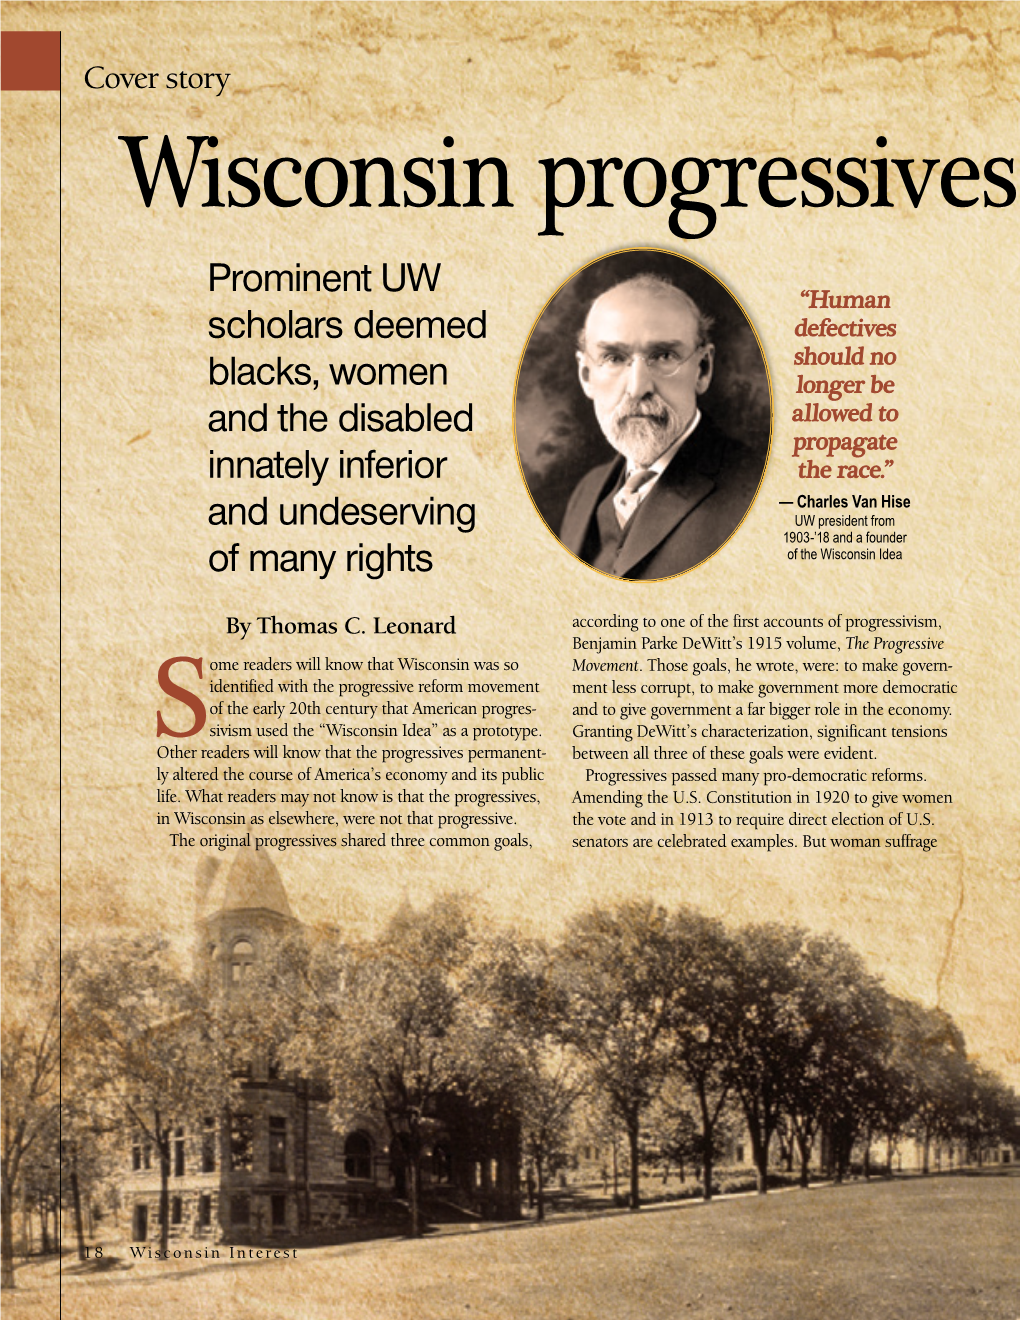 Wisconsin Progressives Had Regressiv